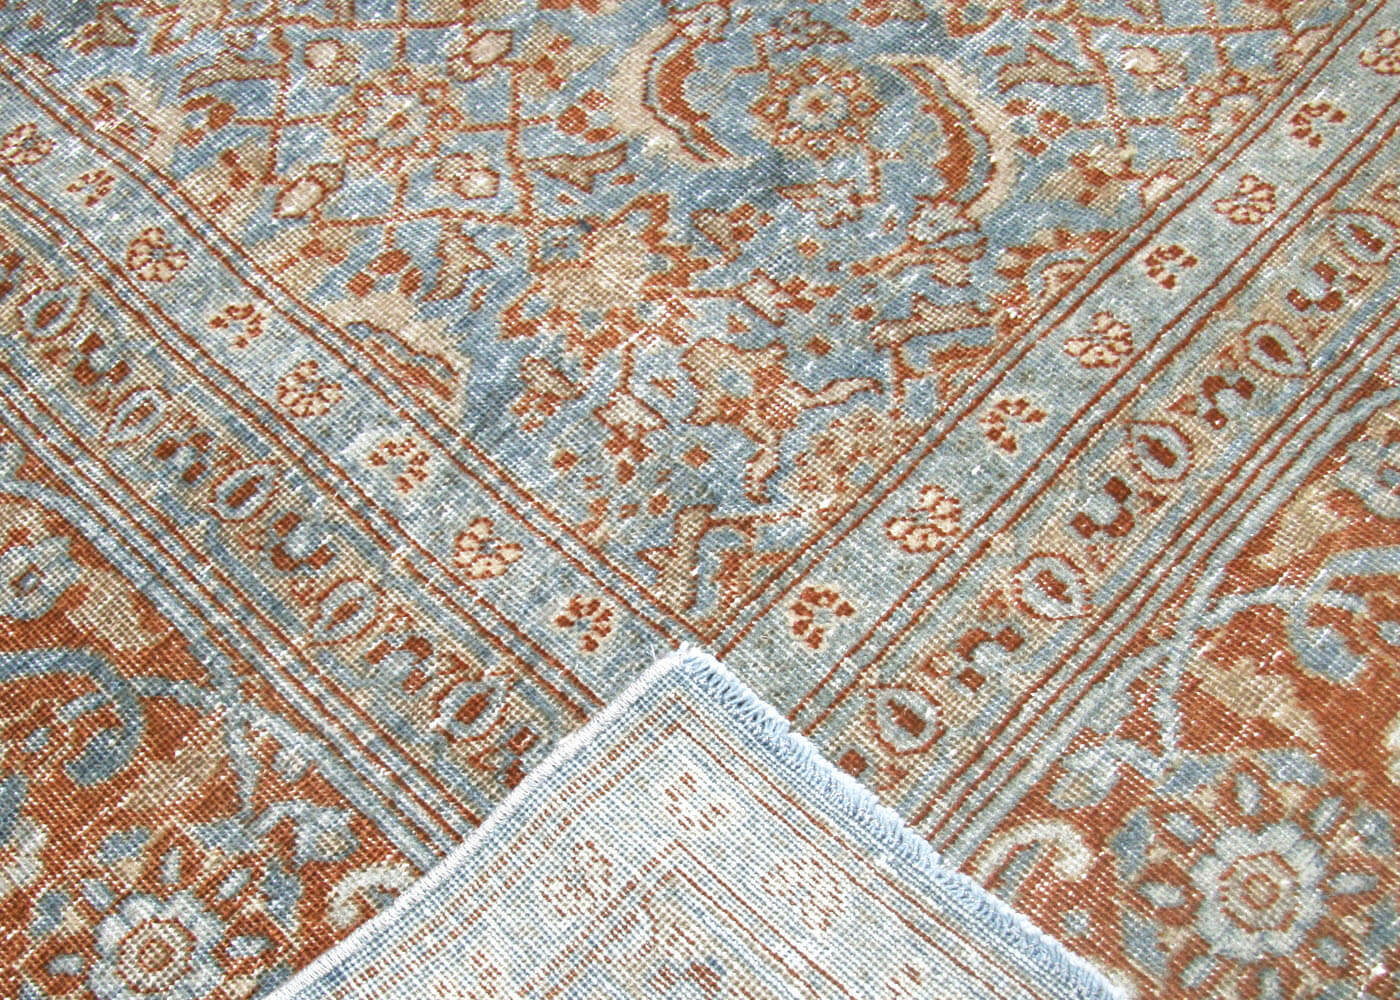 Semi Antique Persian Tabriz Rug - 8'7" x 11'3"